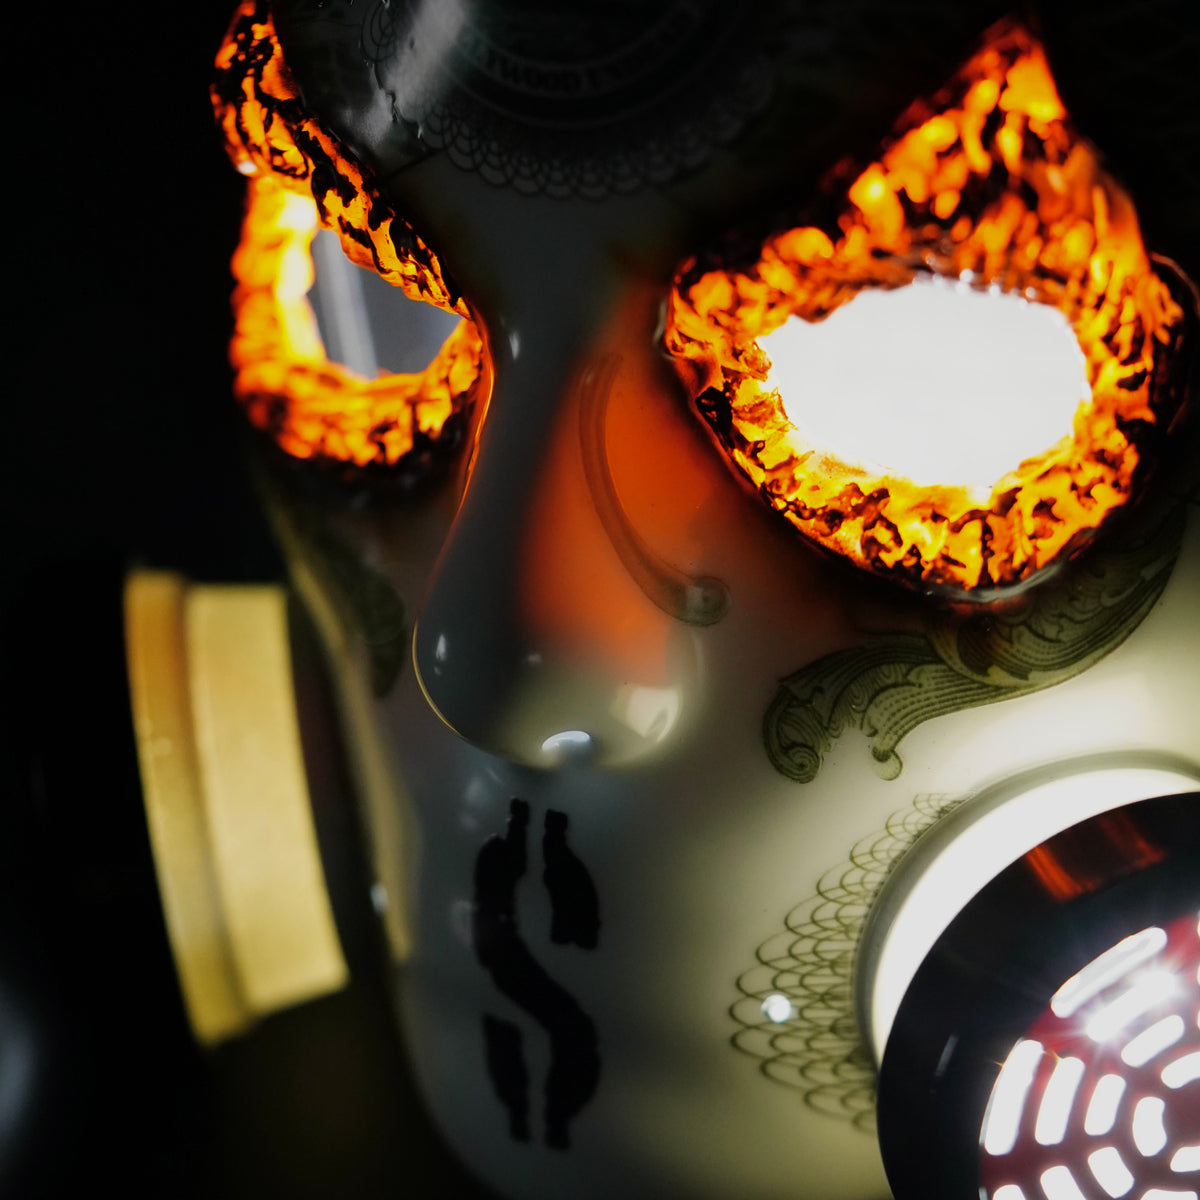 J-Dog NFTU mask in GTA V (Mod WIP) : r/HollywoodUndead